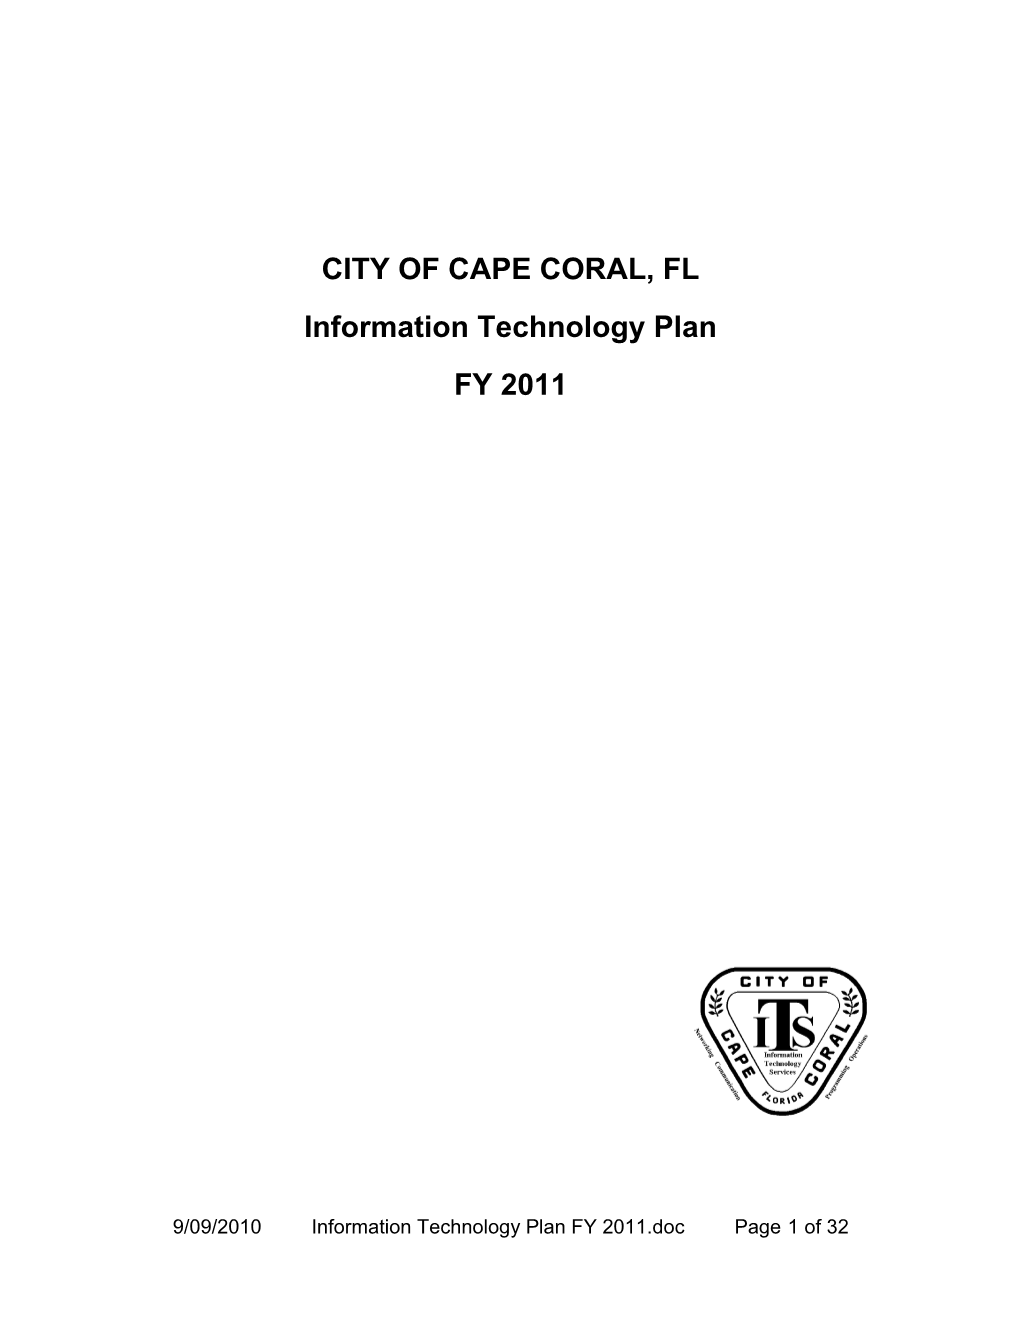 City of Cape Coral Strategic Plan